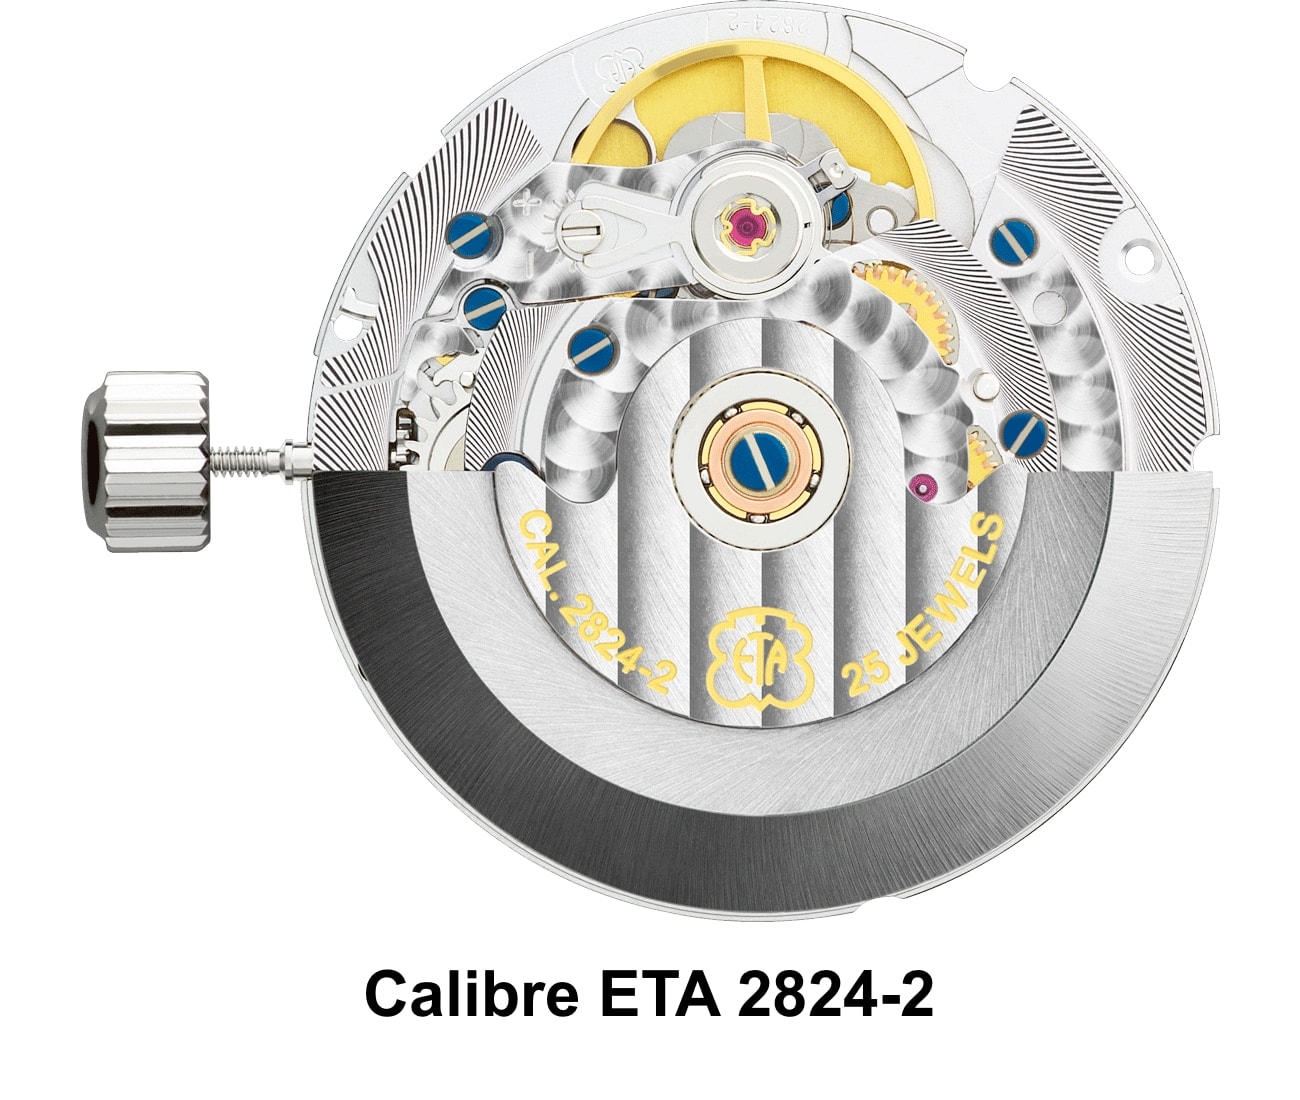 Calibre ETA 2824-2